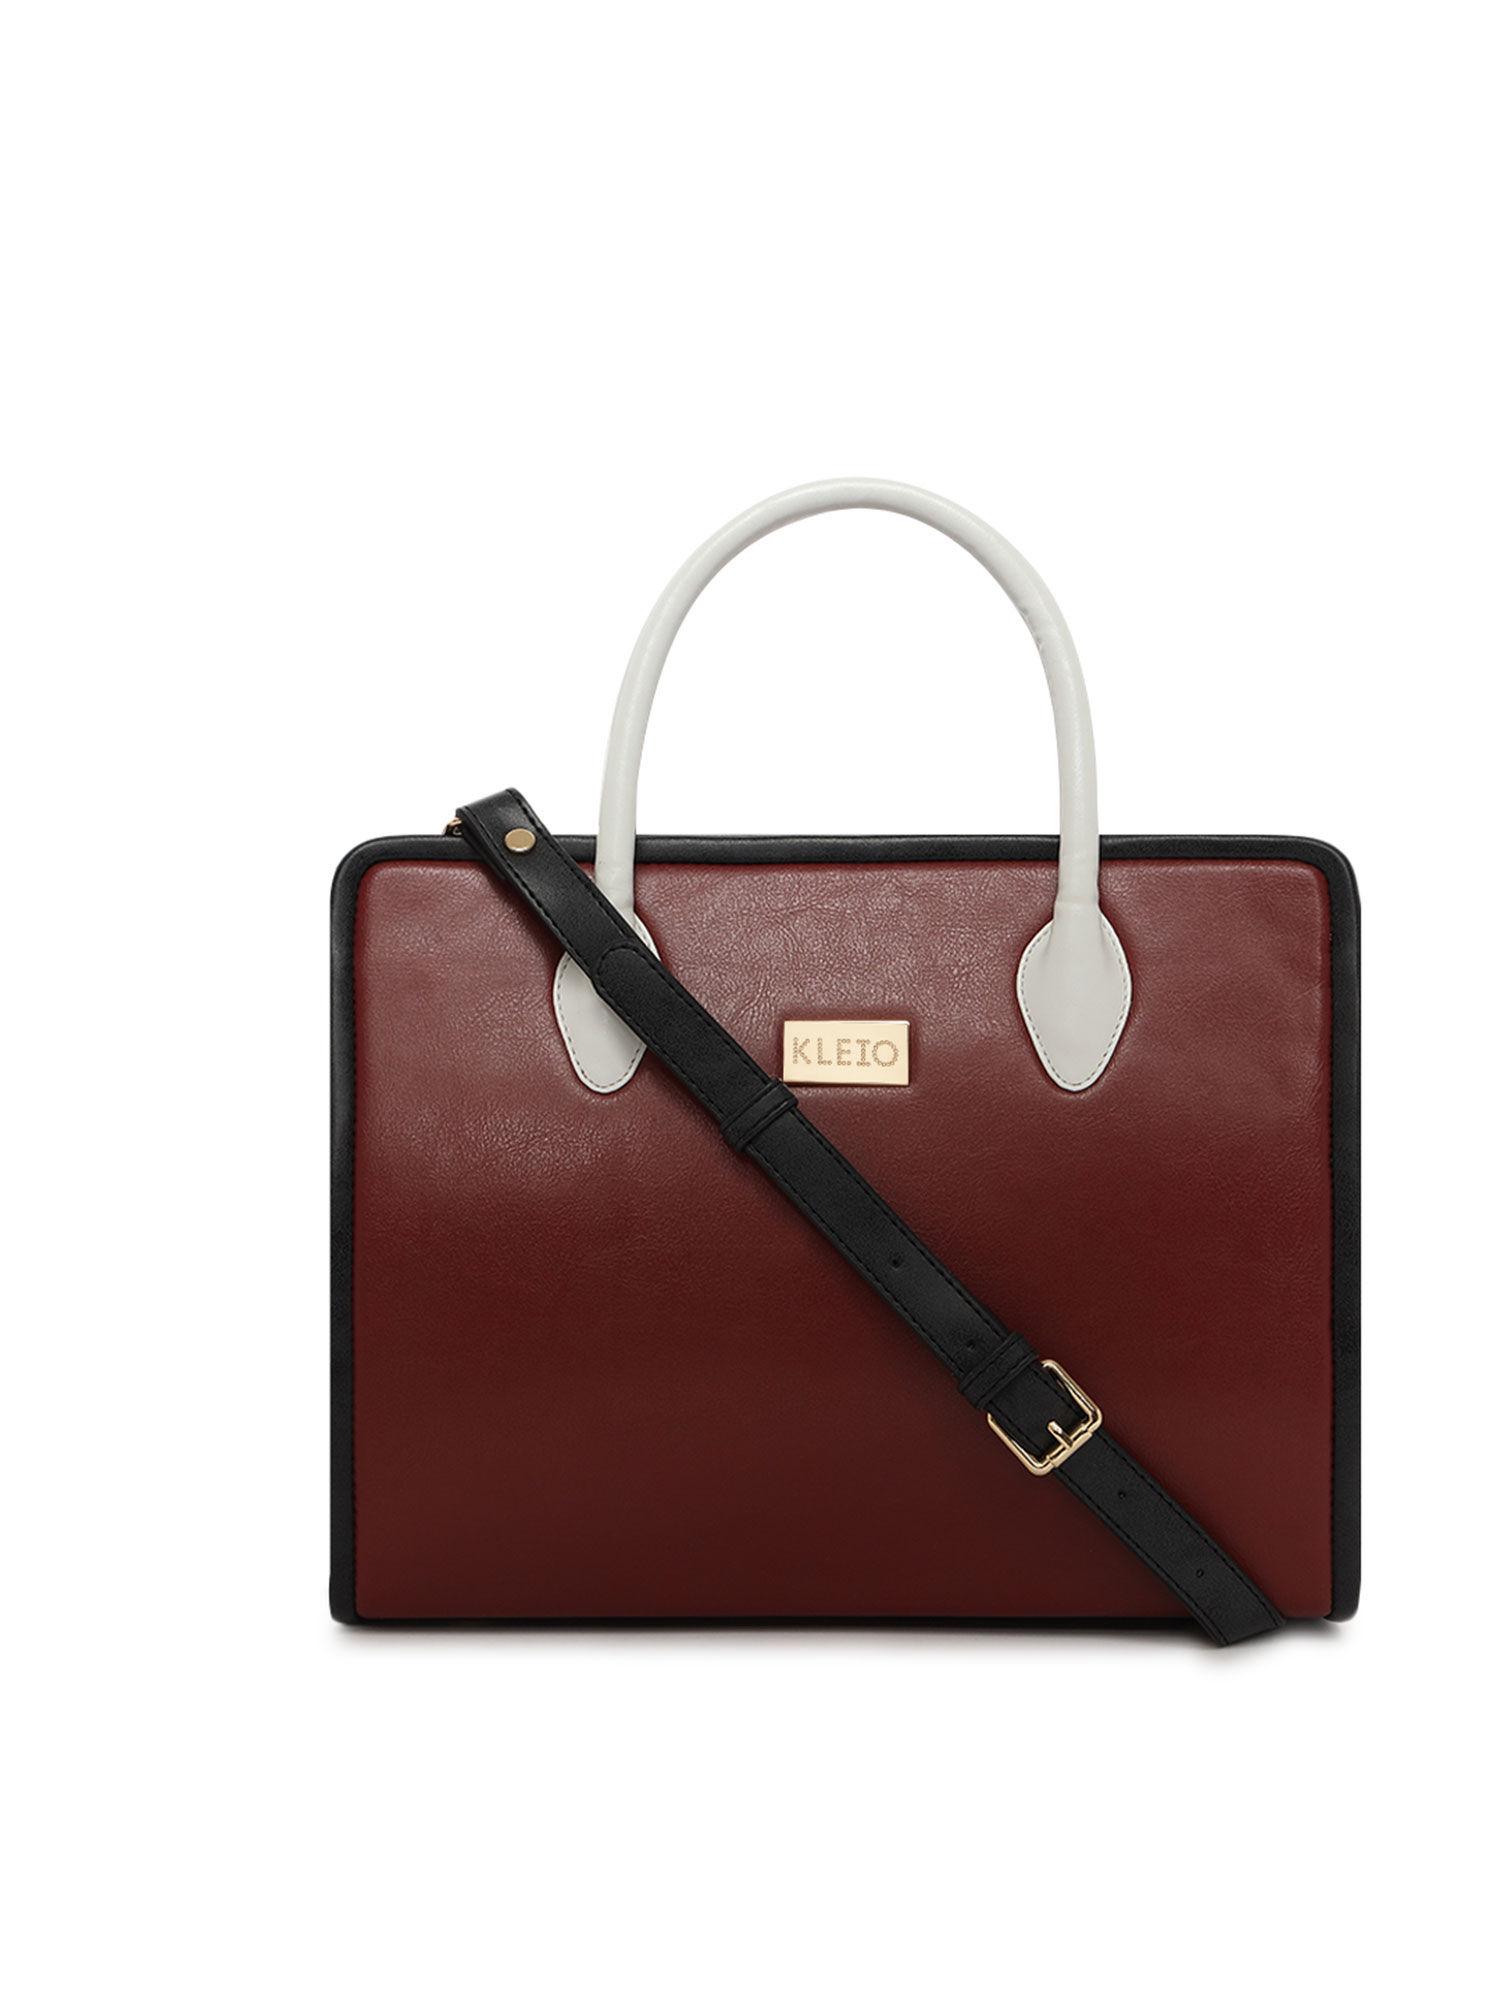 solid casual multiple pockets handbag for women girls (ho9015kl-ch) (cherry)